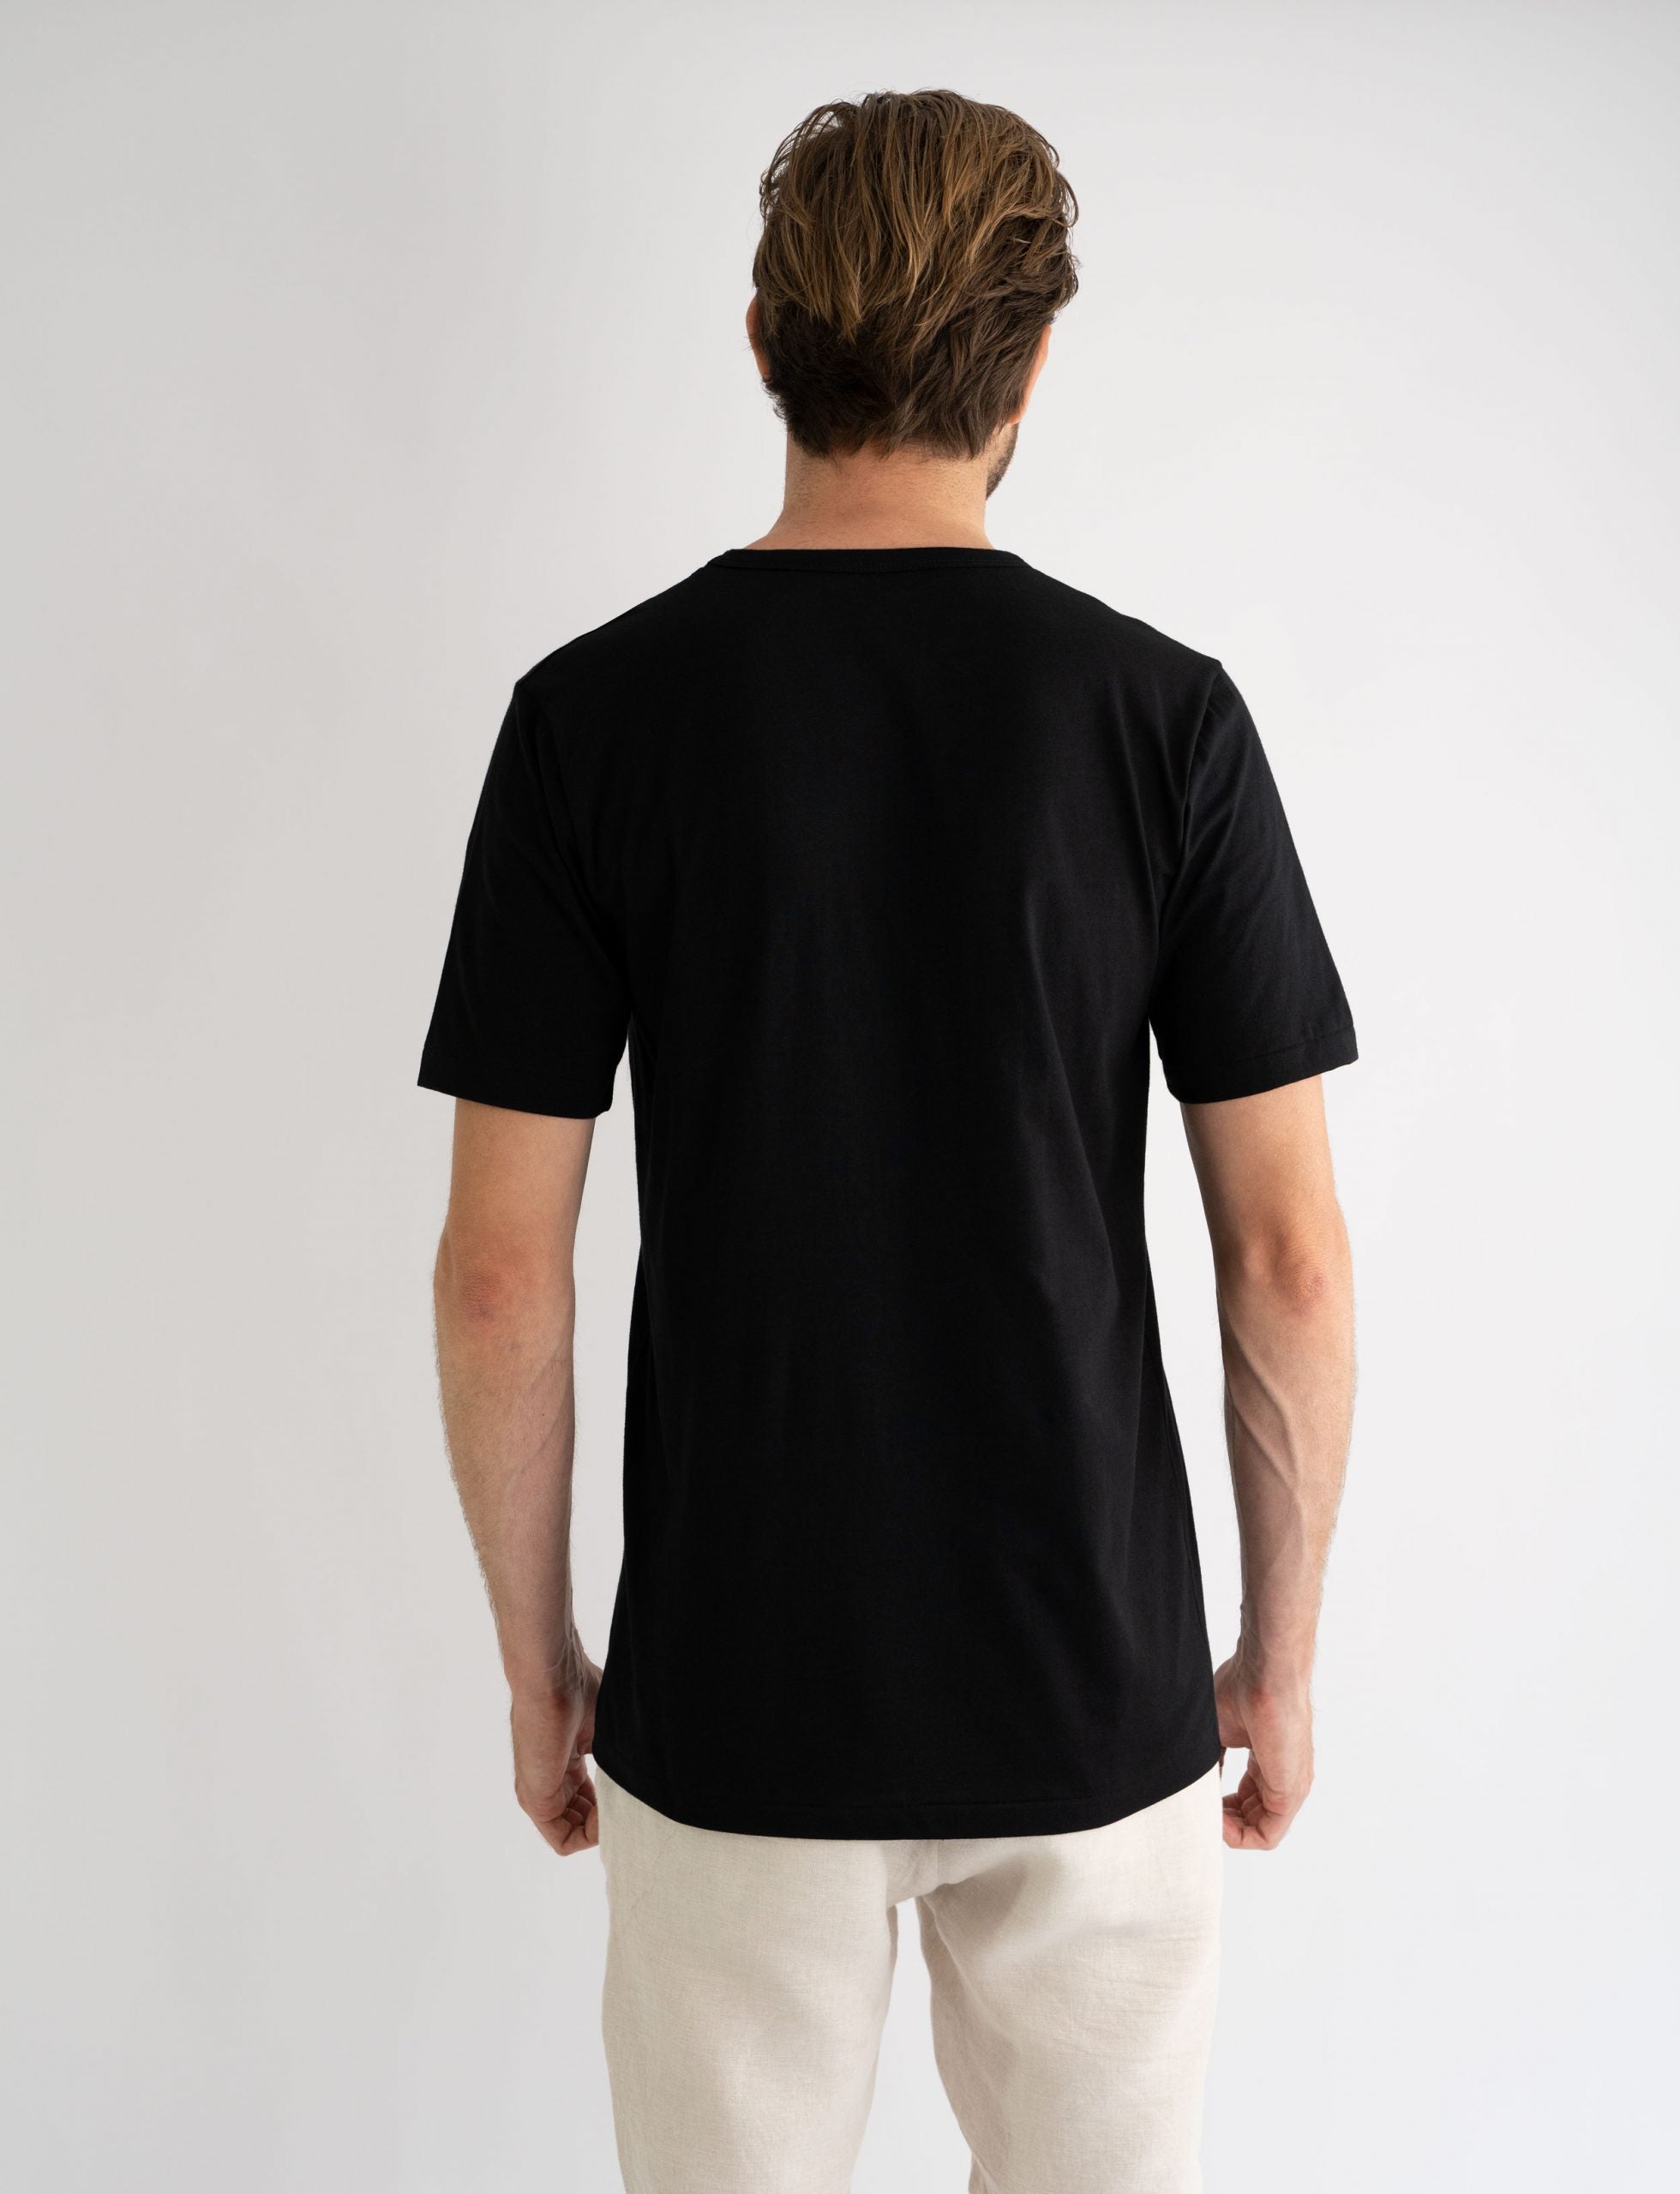 t-shirt organic cotton australian made black